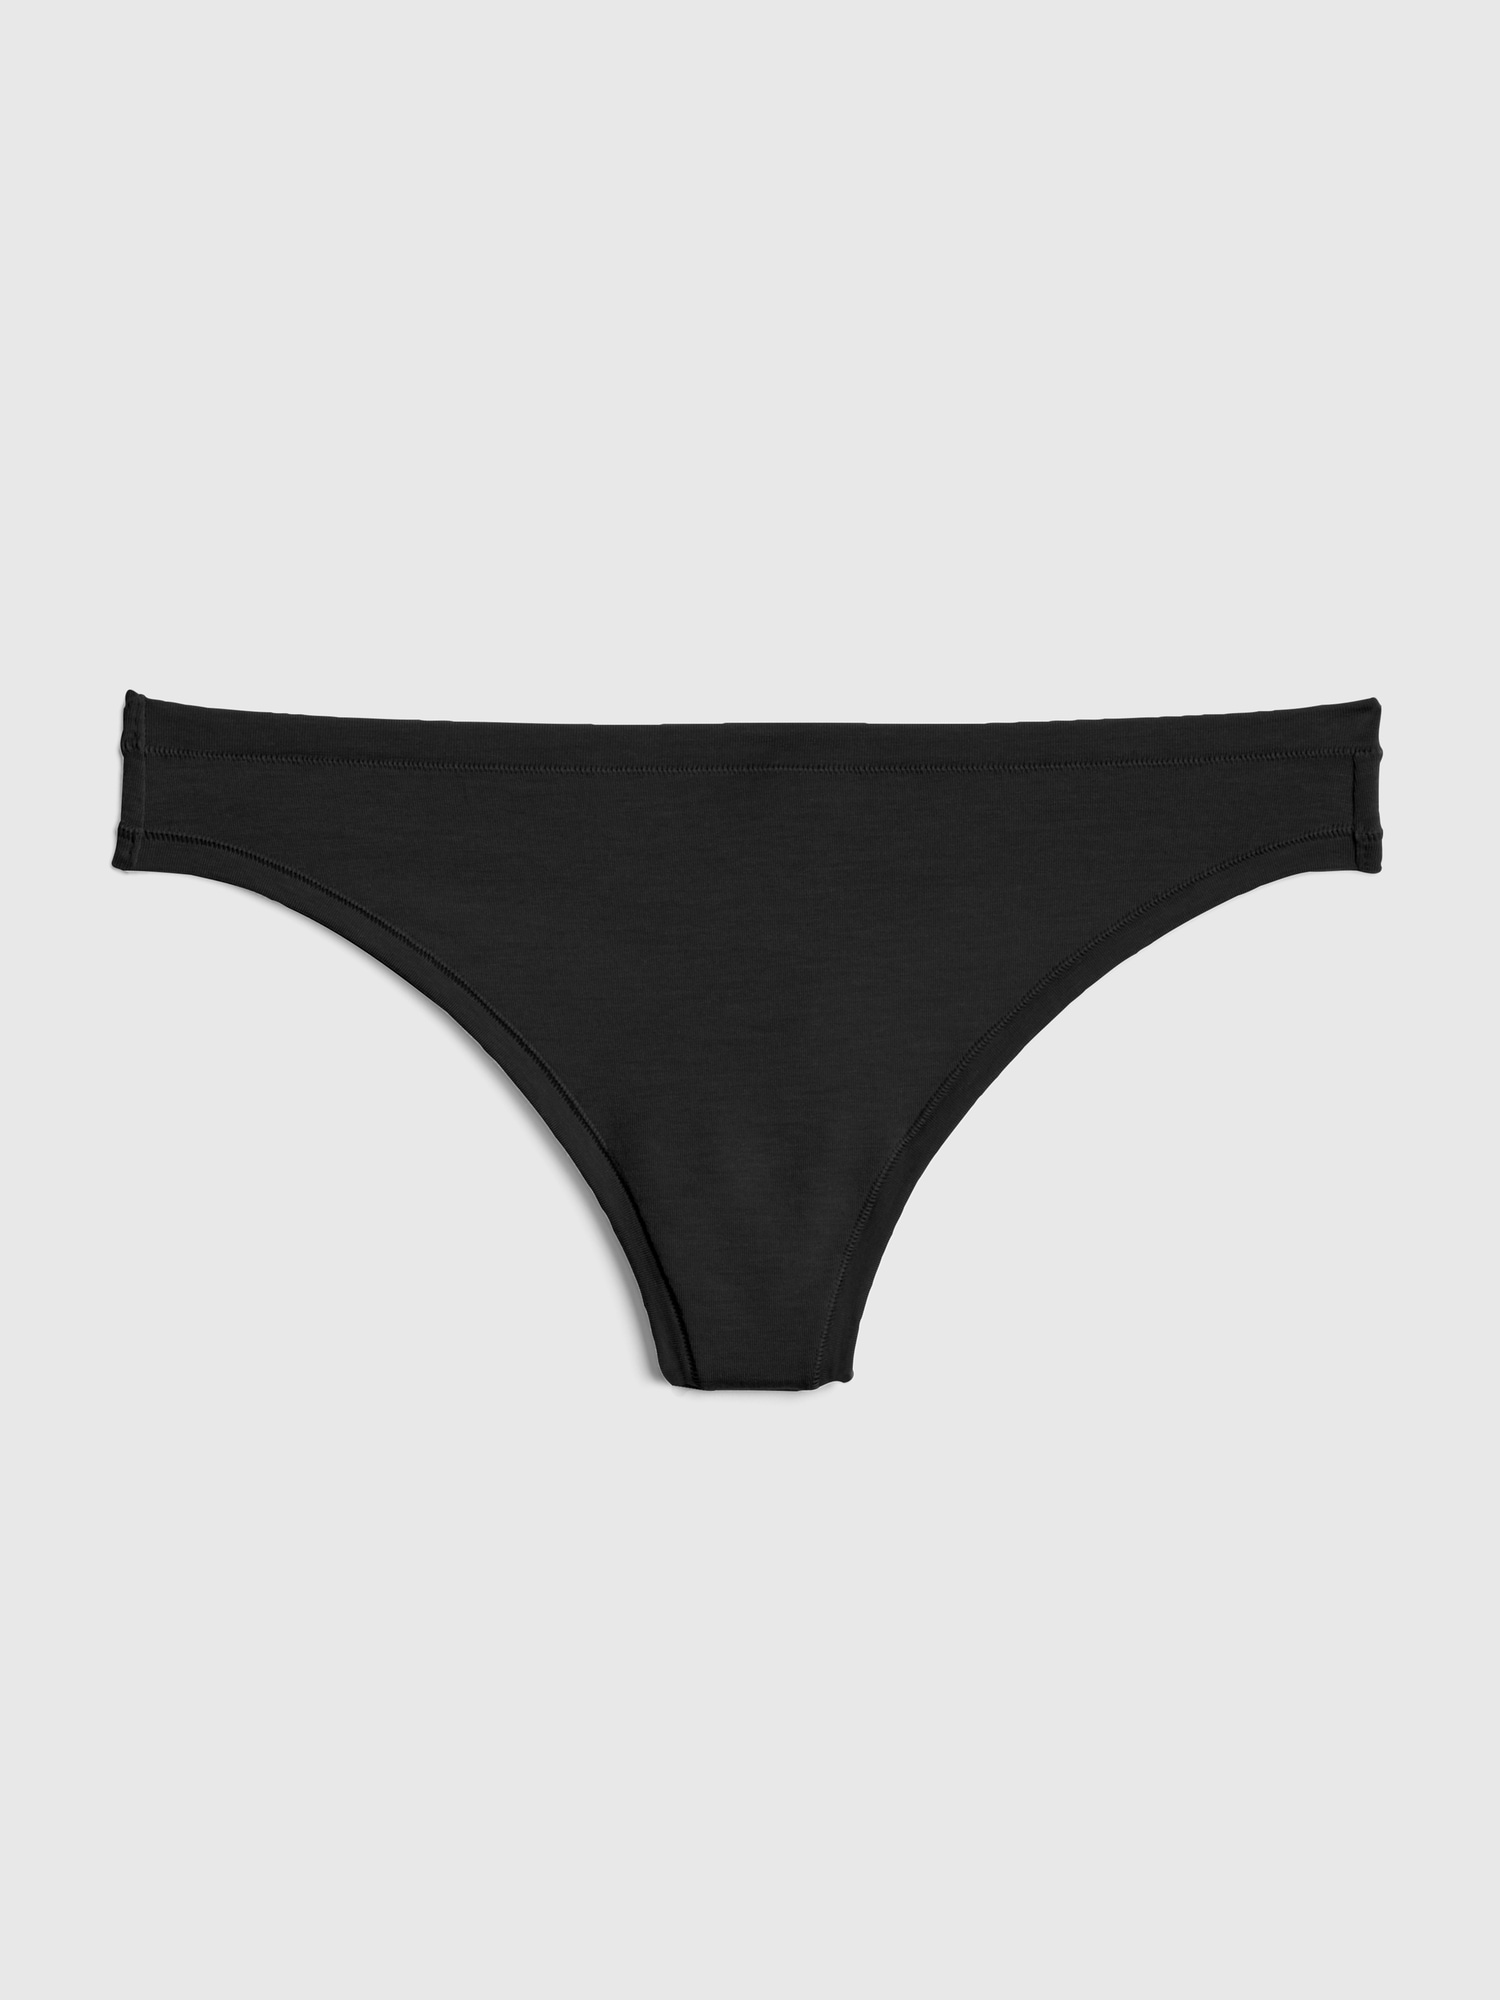 Gap GapBody Women's Breathe Thong Underwear GPW00183 - Heather